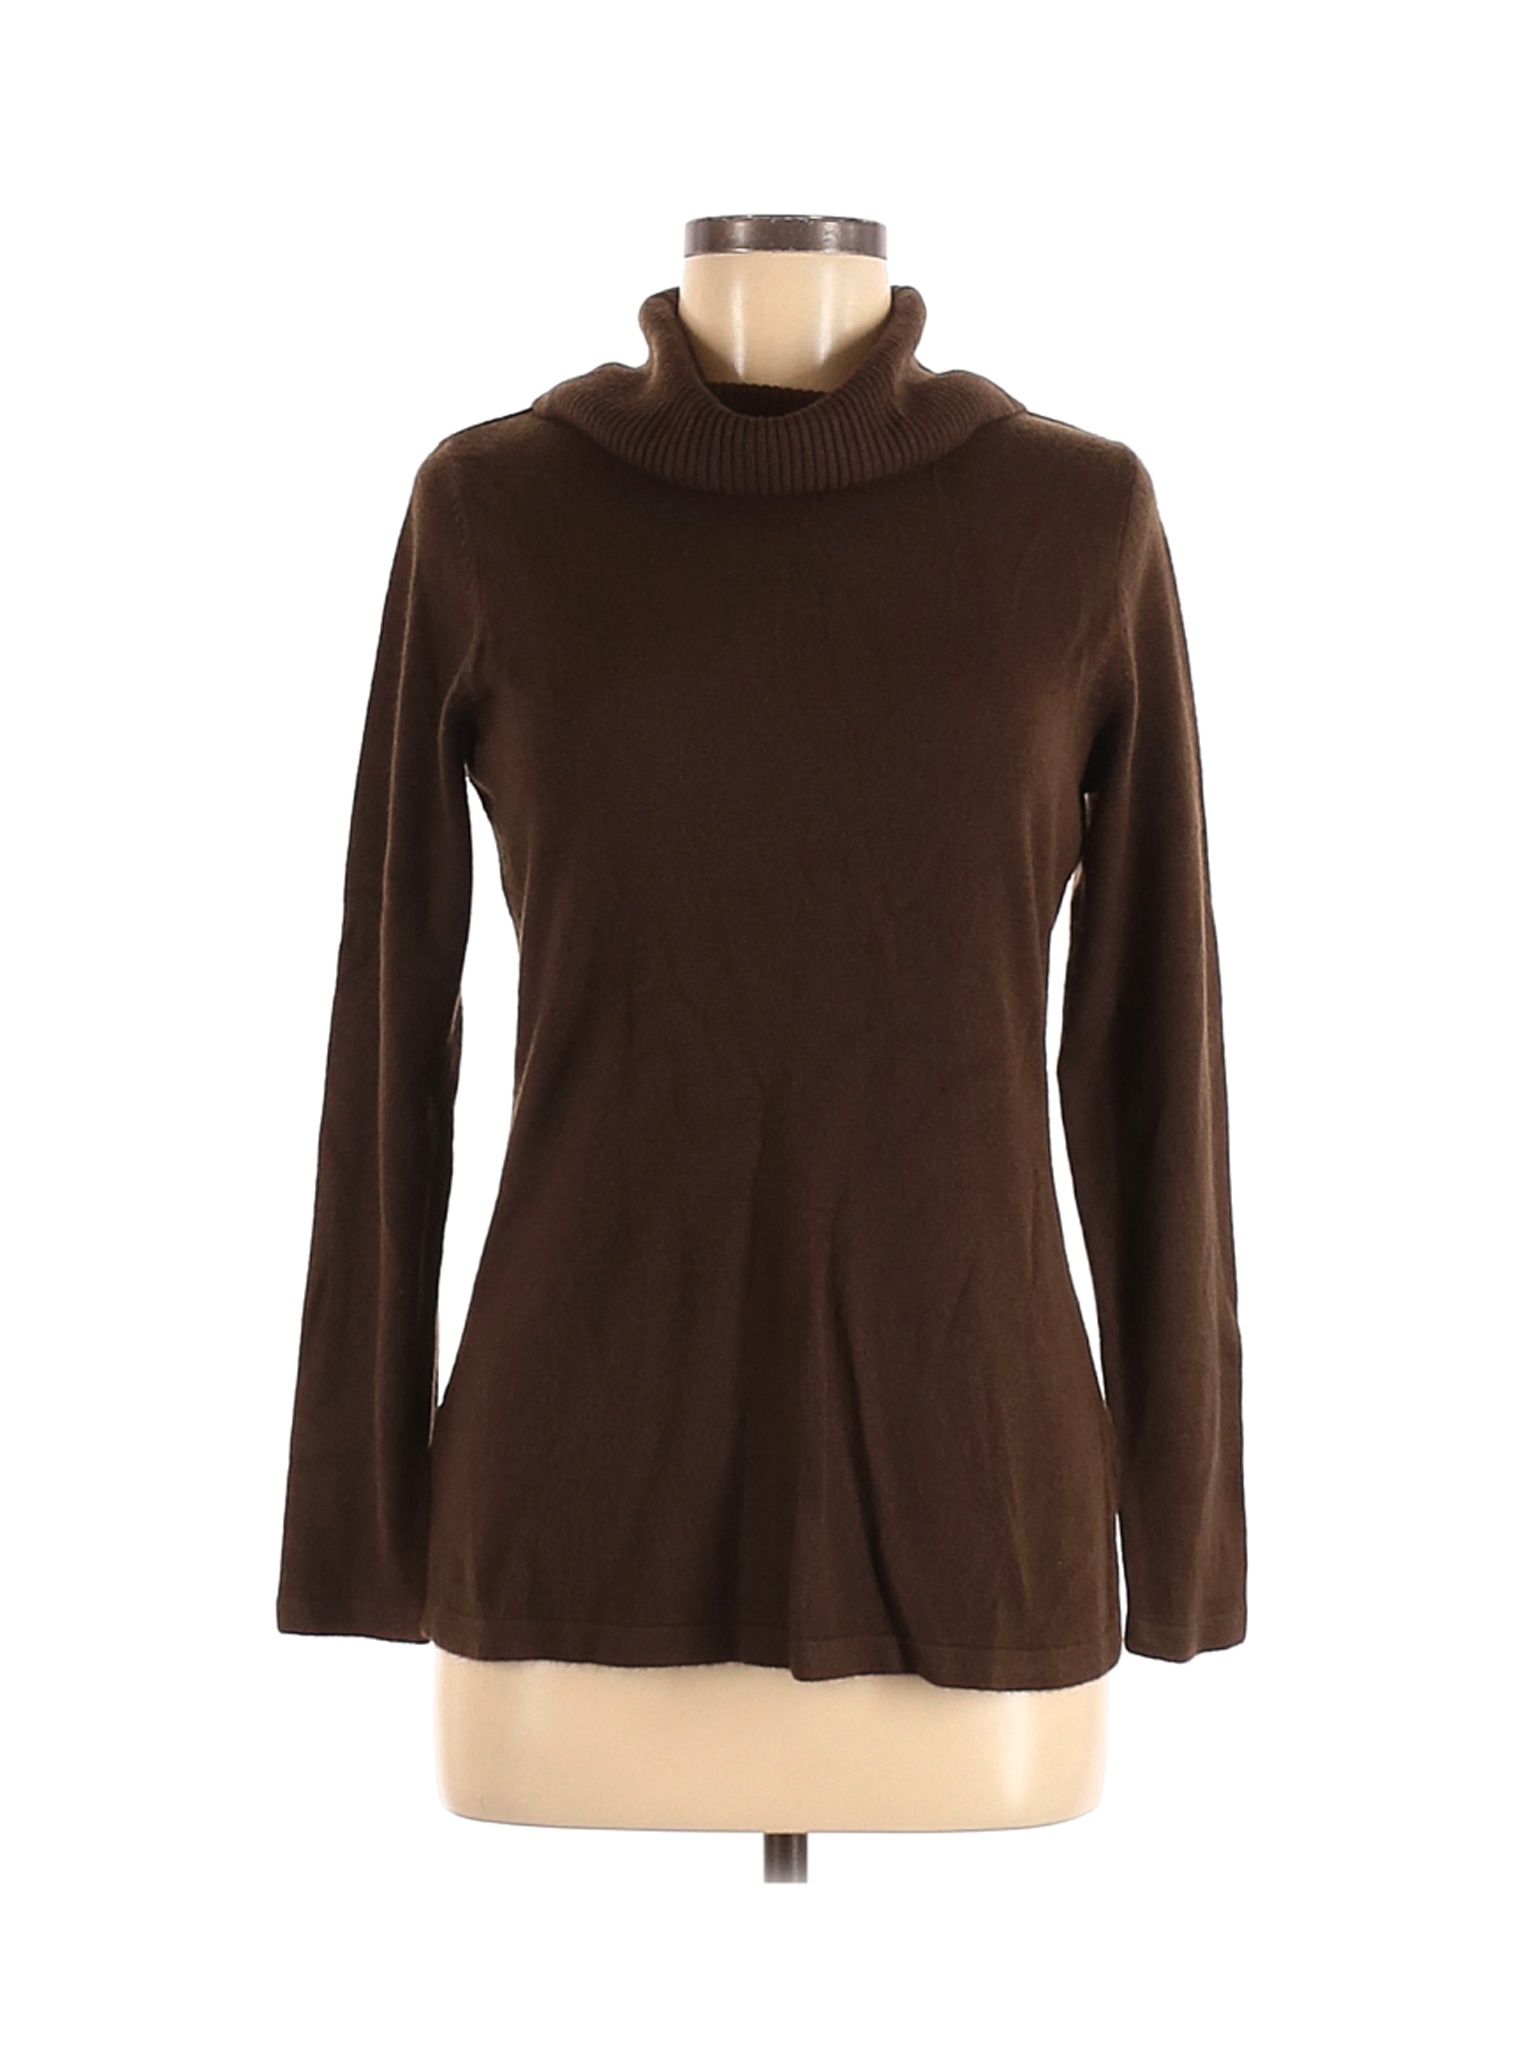 Studio Works Women Brown Pullover Sweater M Petites | eBay